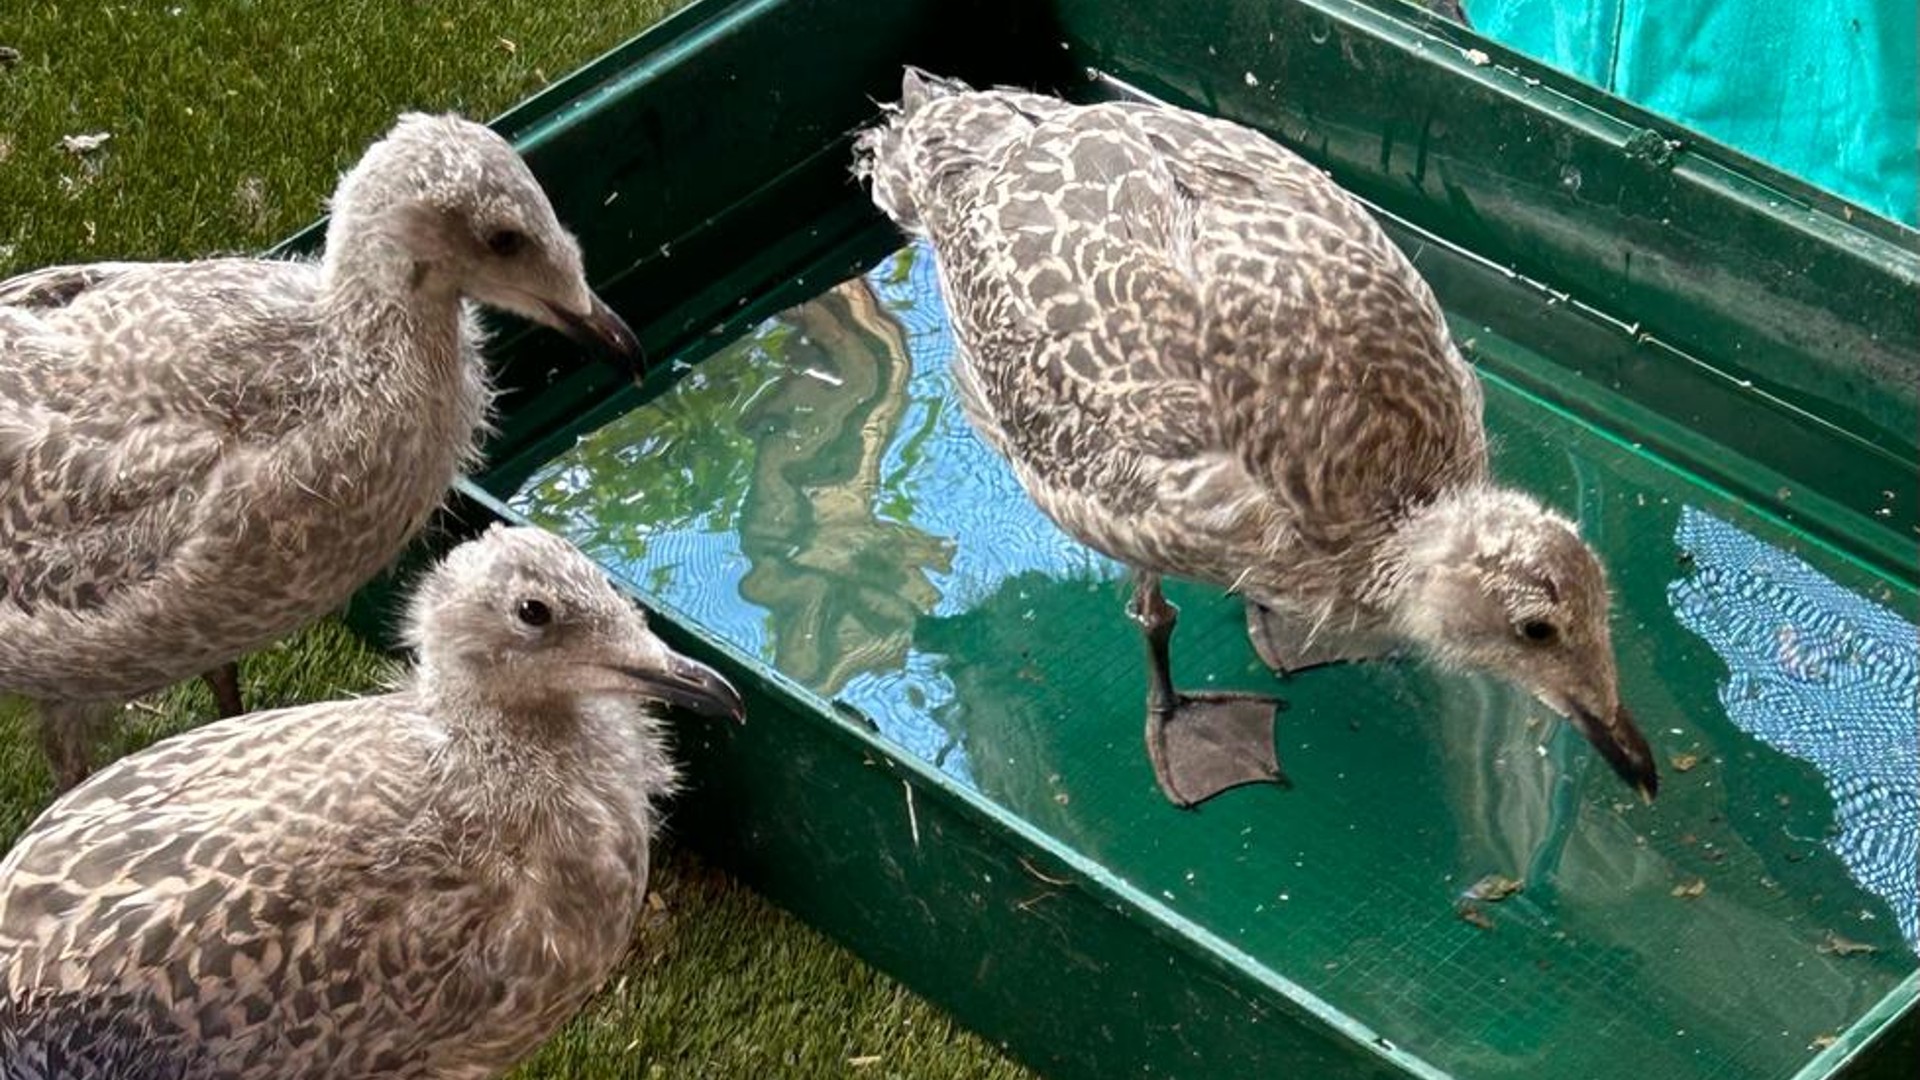 Three young herring gulls bathing in a plastic tub